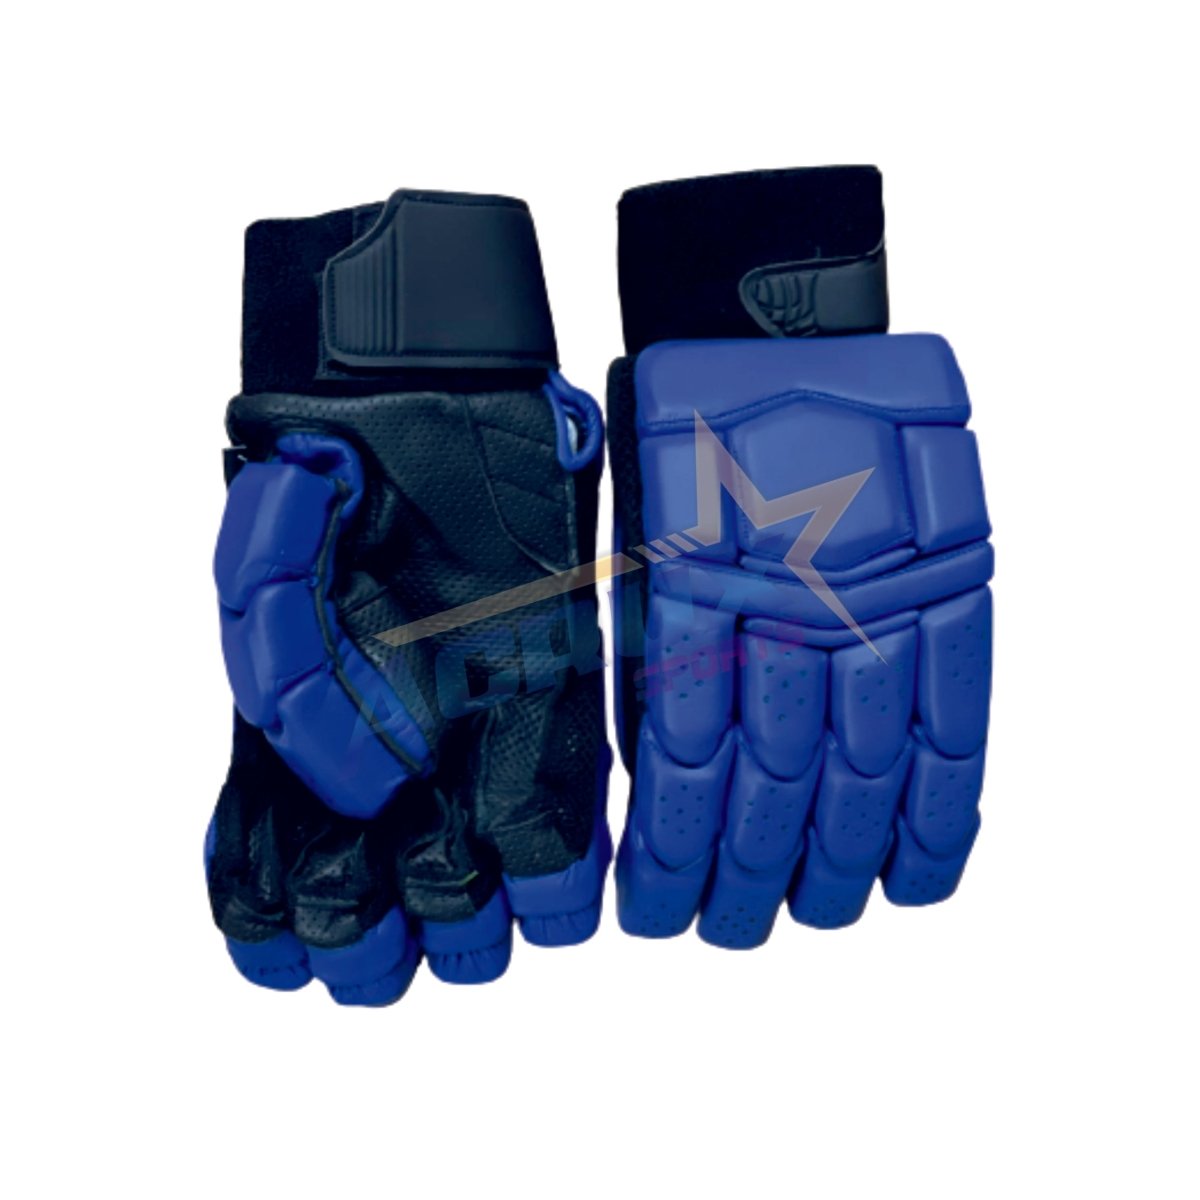 JJ Sports BL-09 Coloured Cricket Batting Gloves.